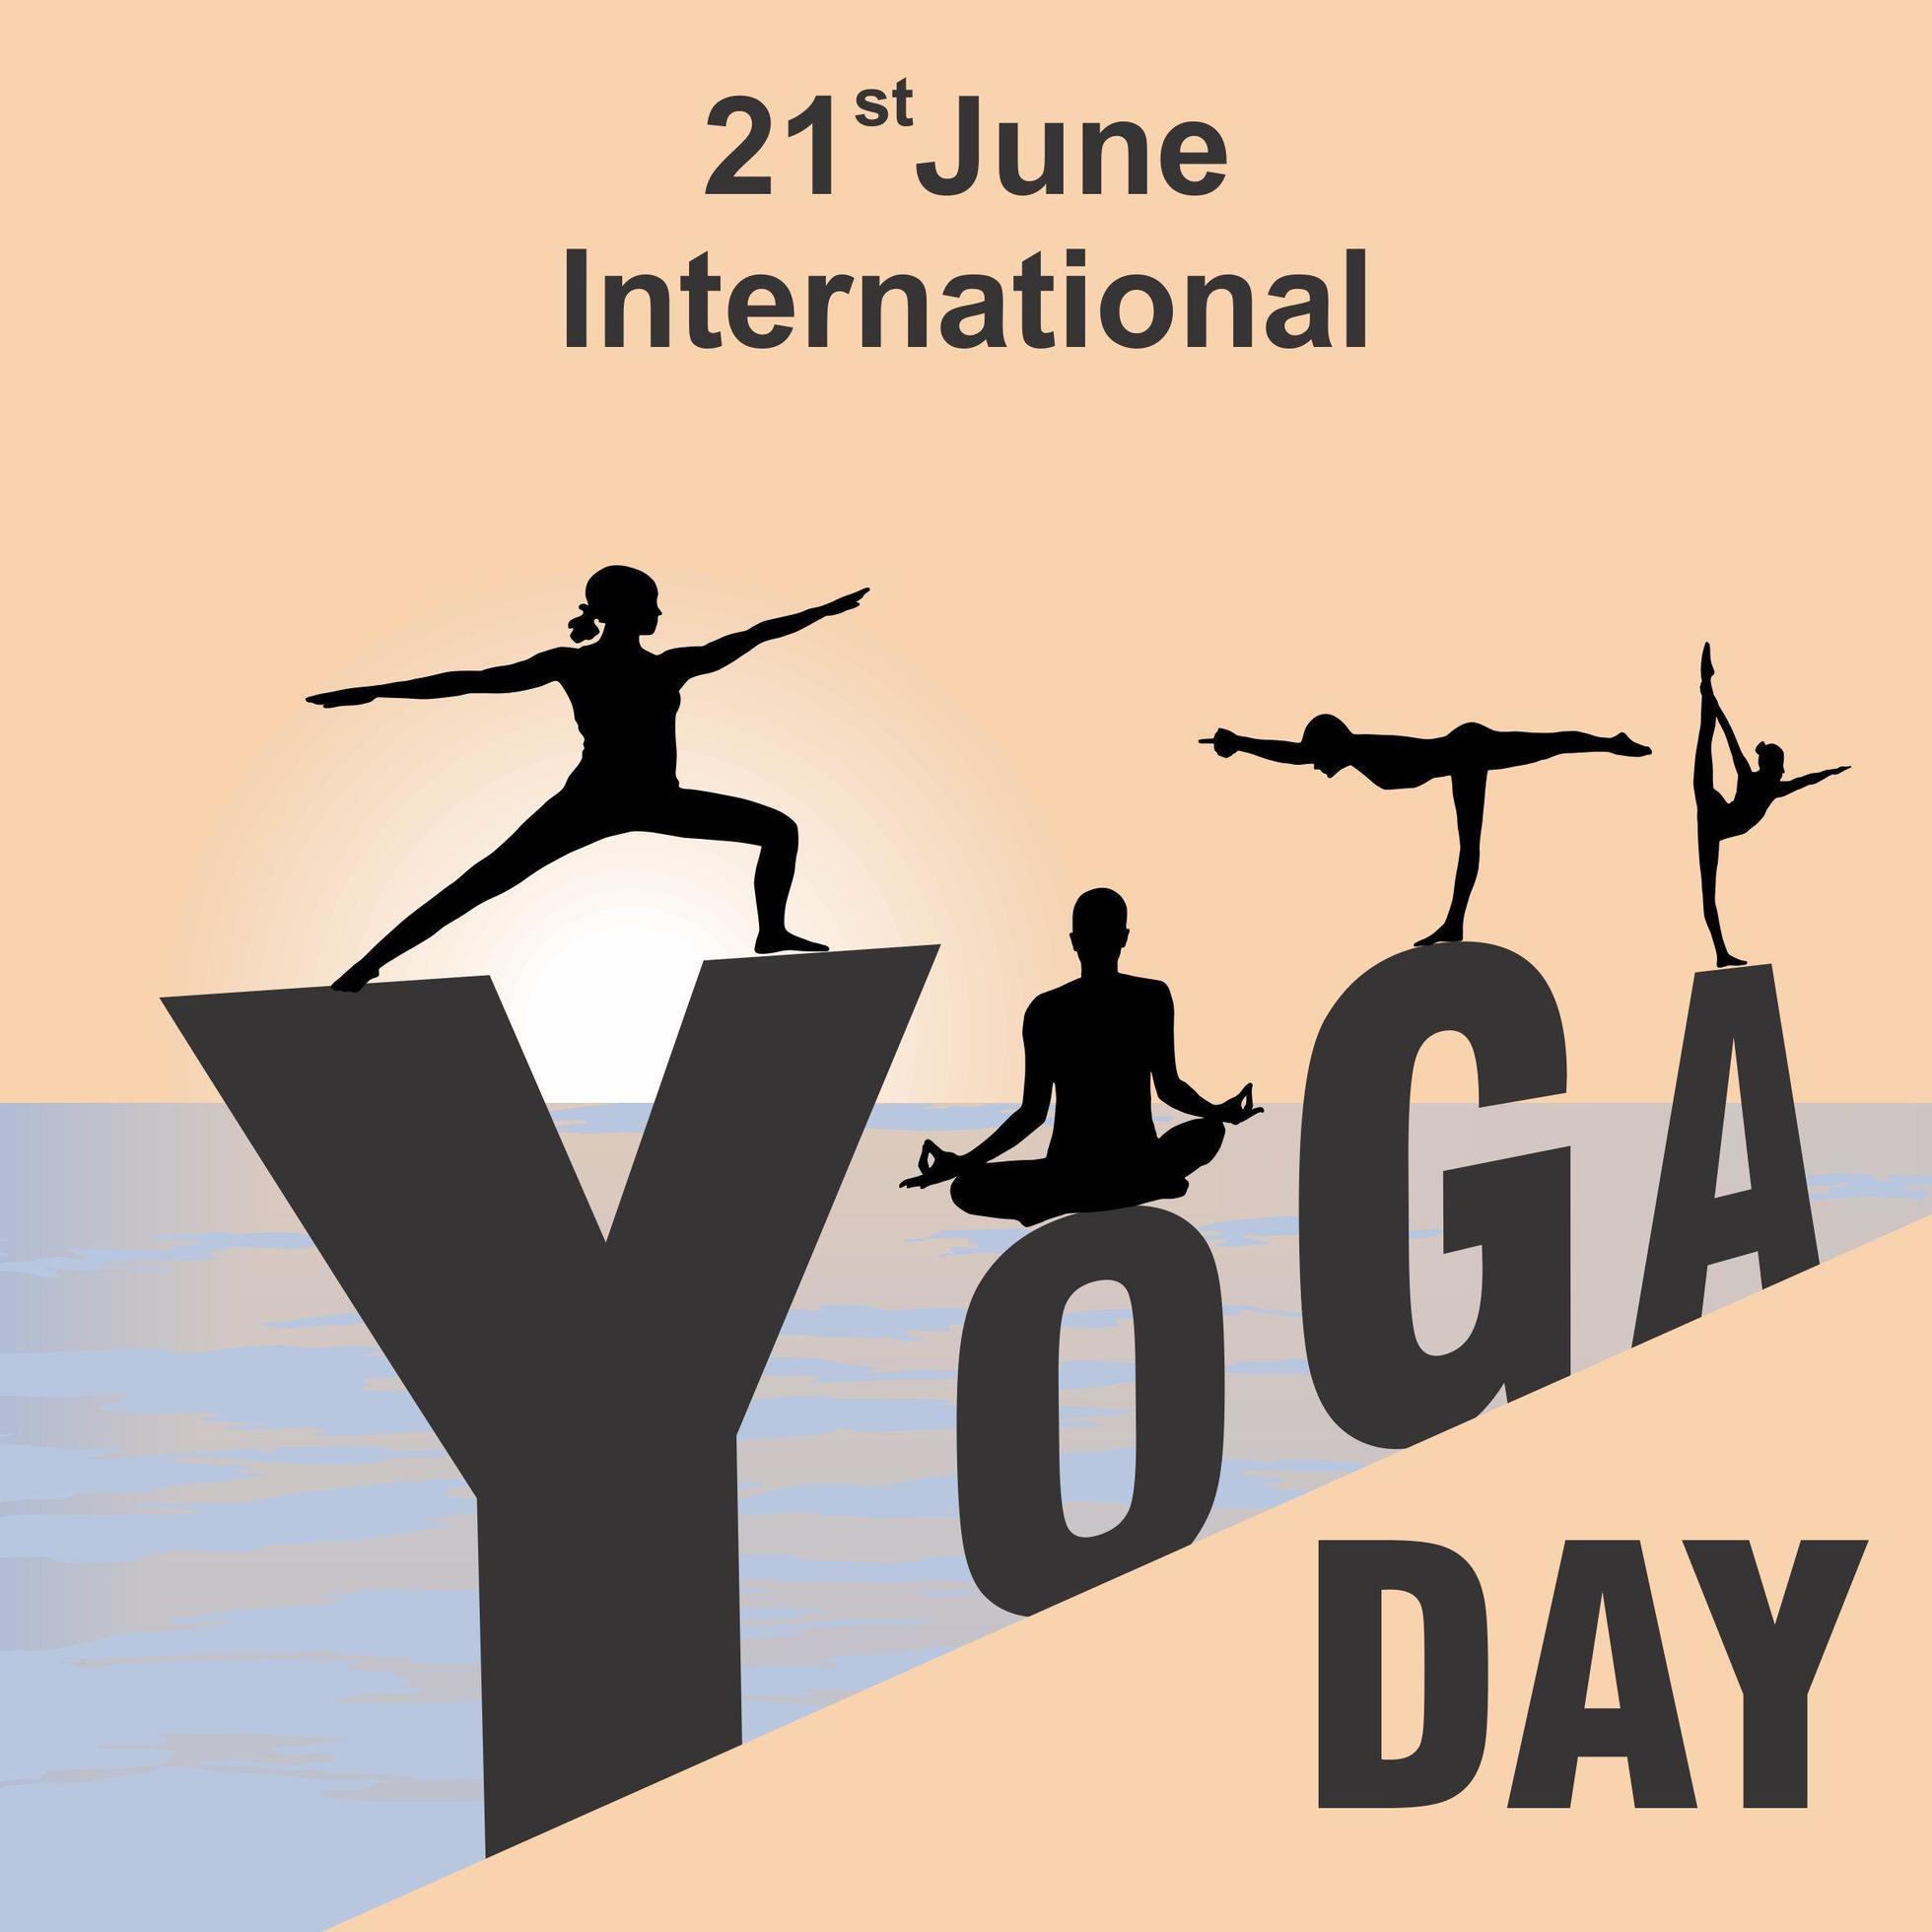 presentation on international yoga day